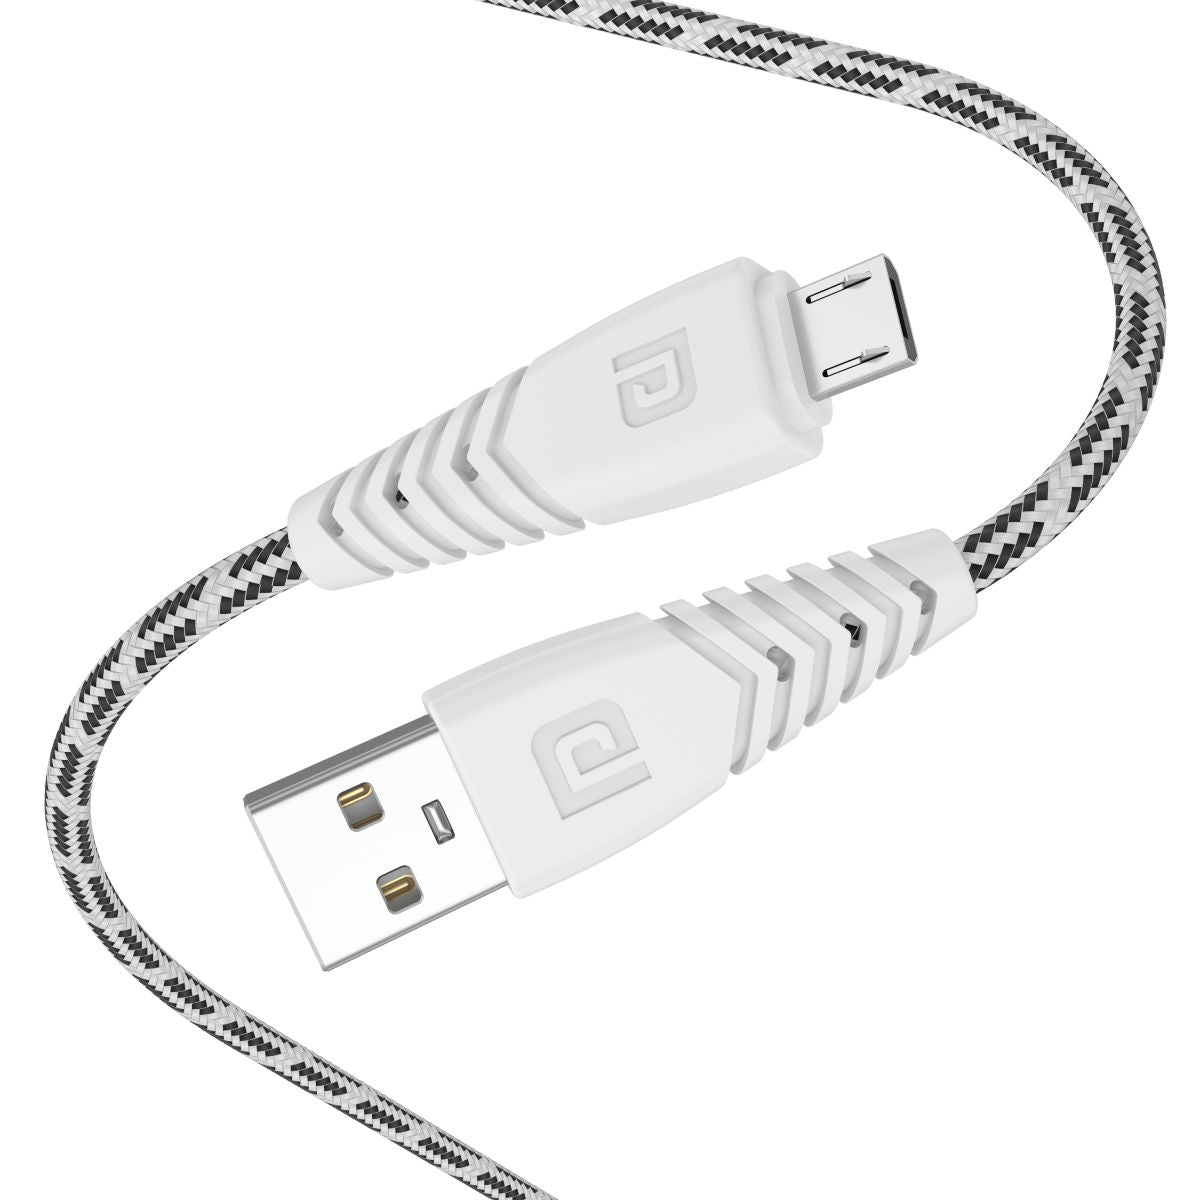 PORTRONICS-Konnect Spydr Micro USB Cable